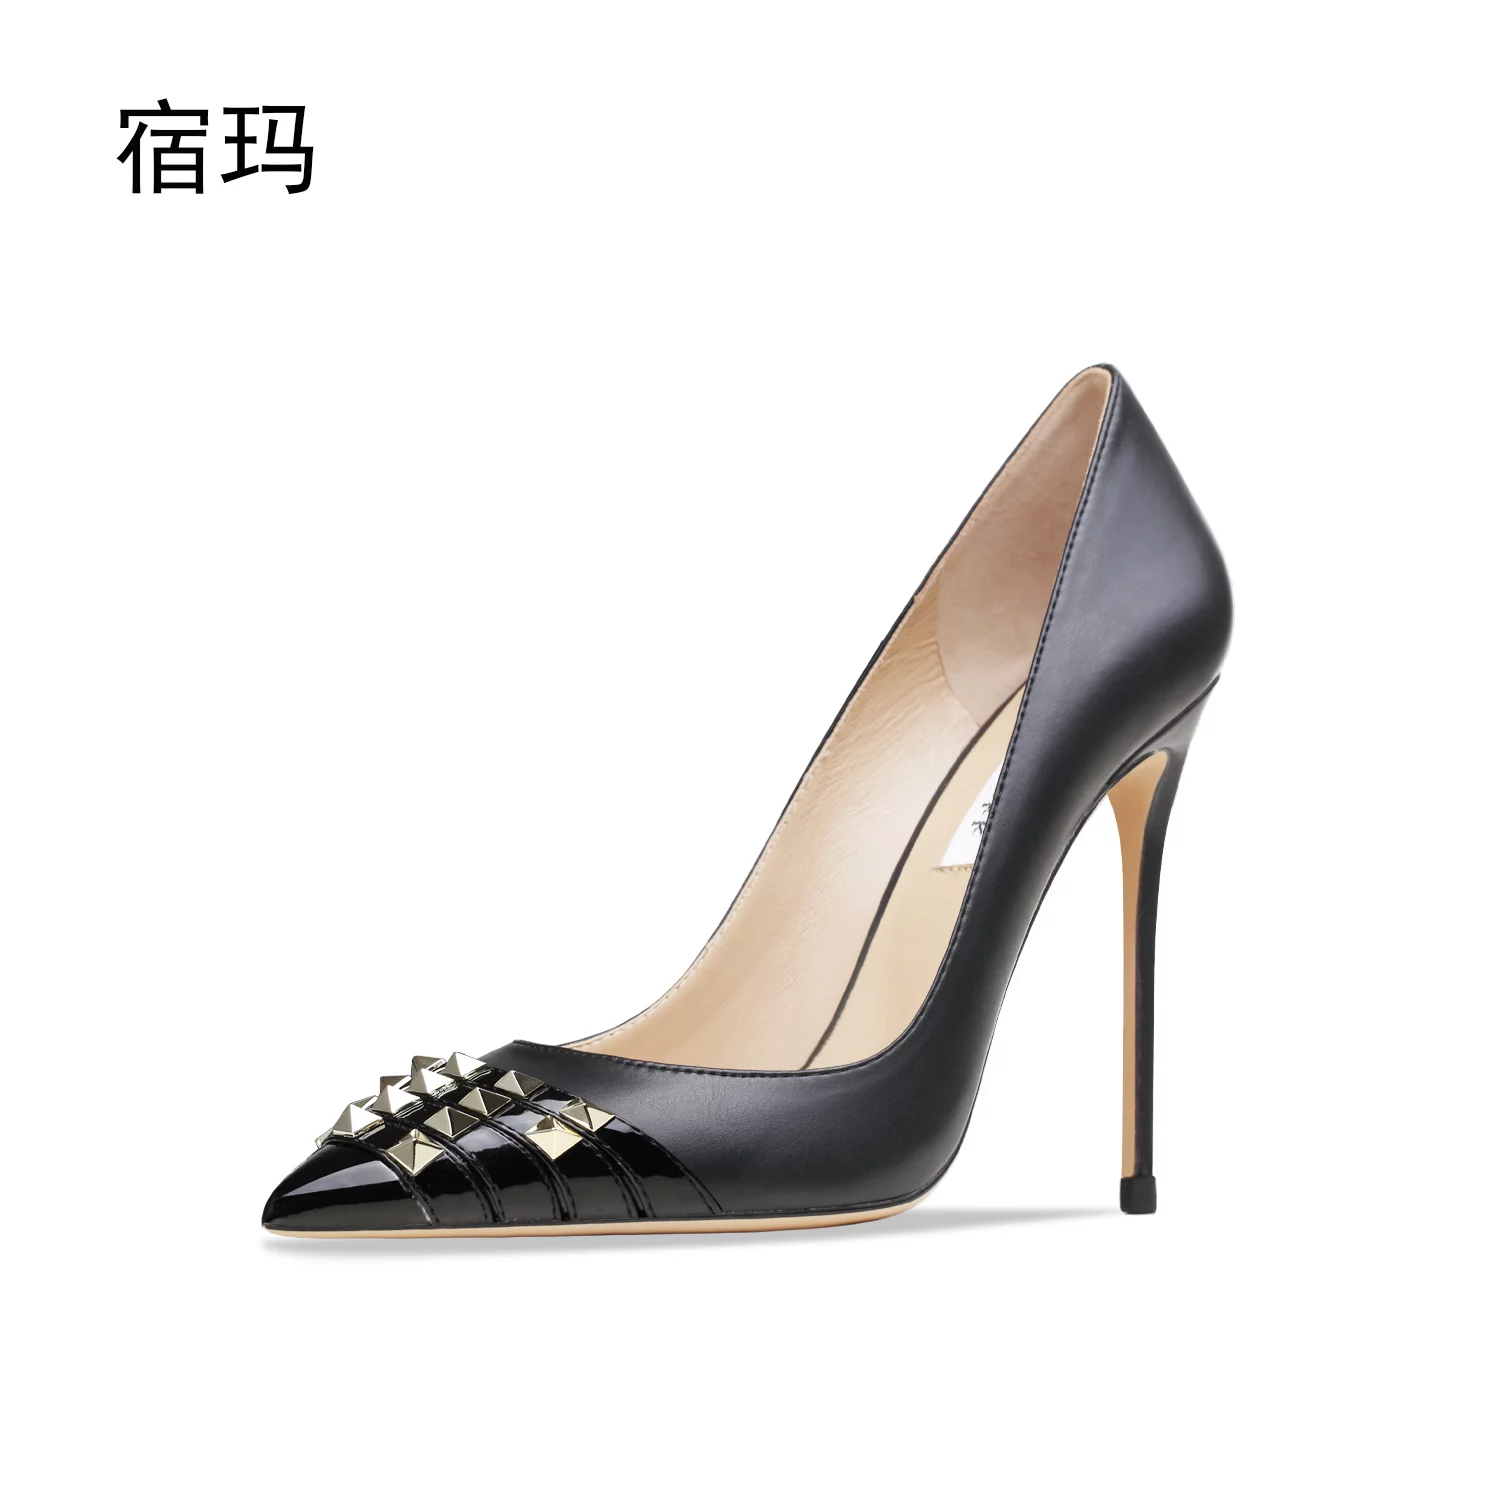 Franco Sarto Shoe Size 6 Black Heel - Margaret's Fine Consignment